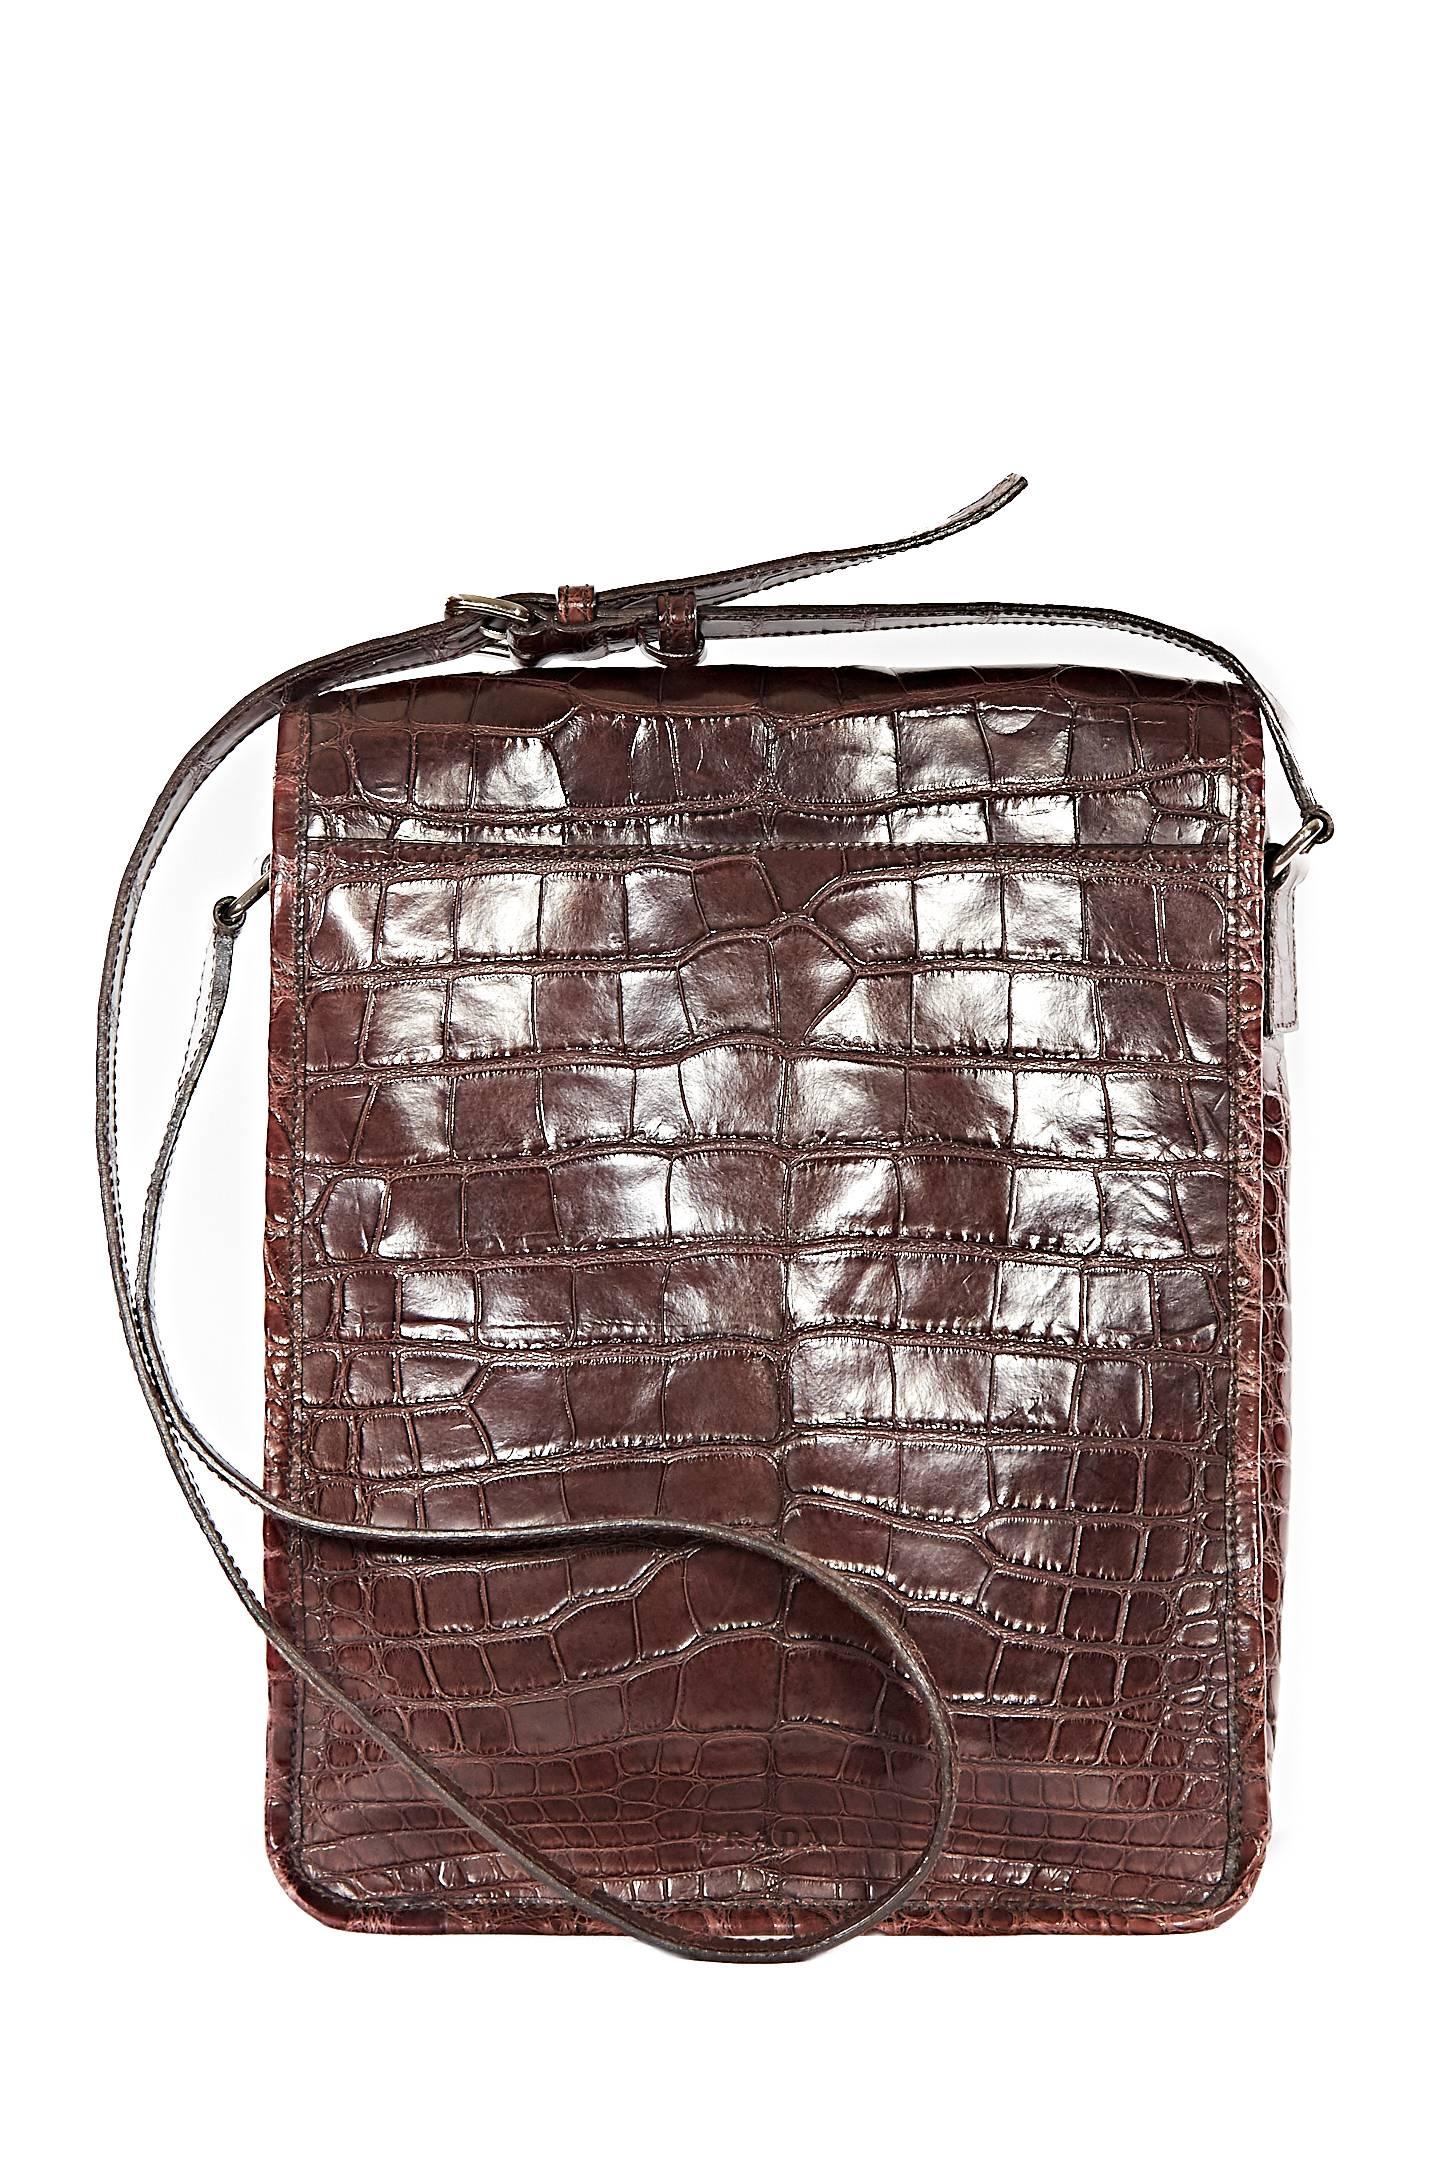 Prada Brown Crocodile Crossbody Bag. Messenger style flap with belt closure.